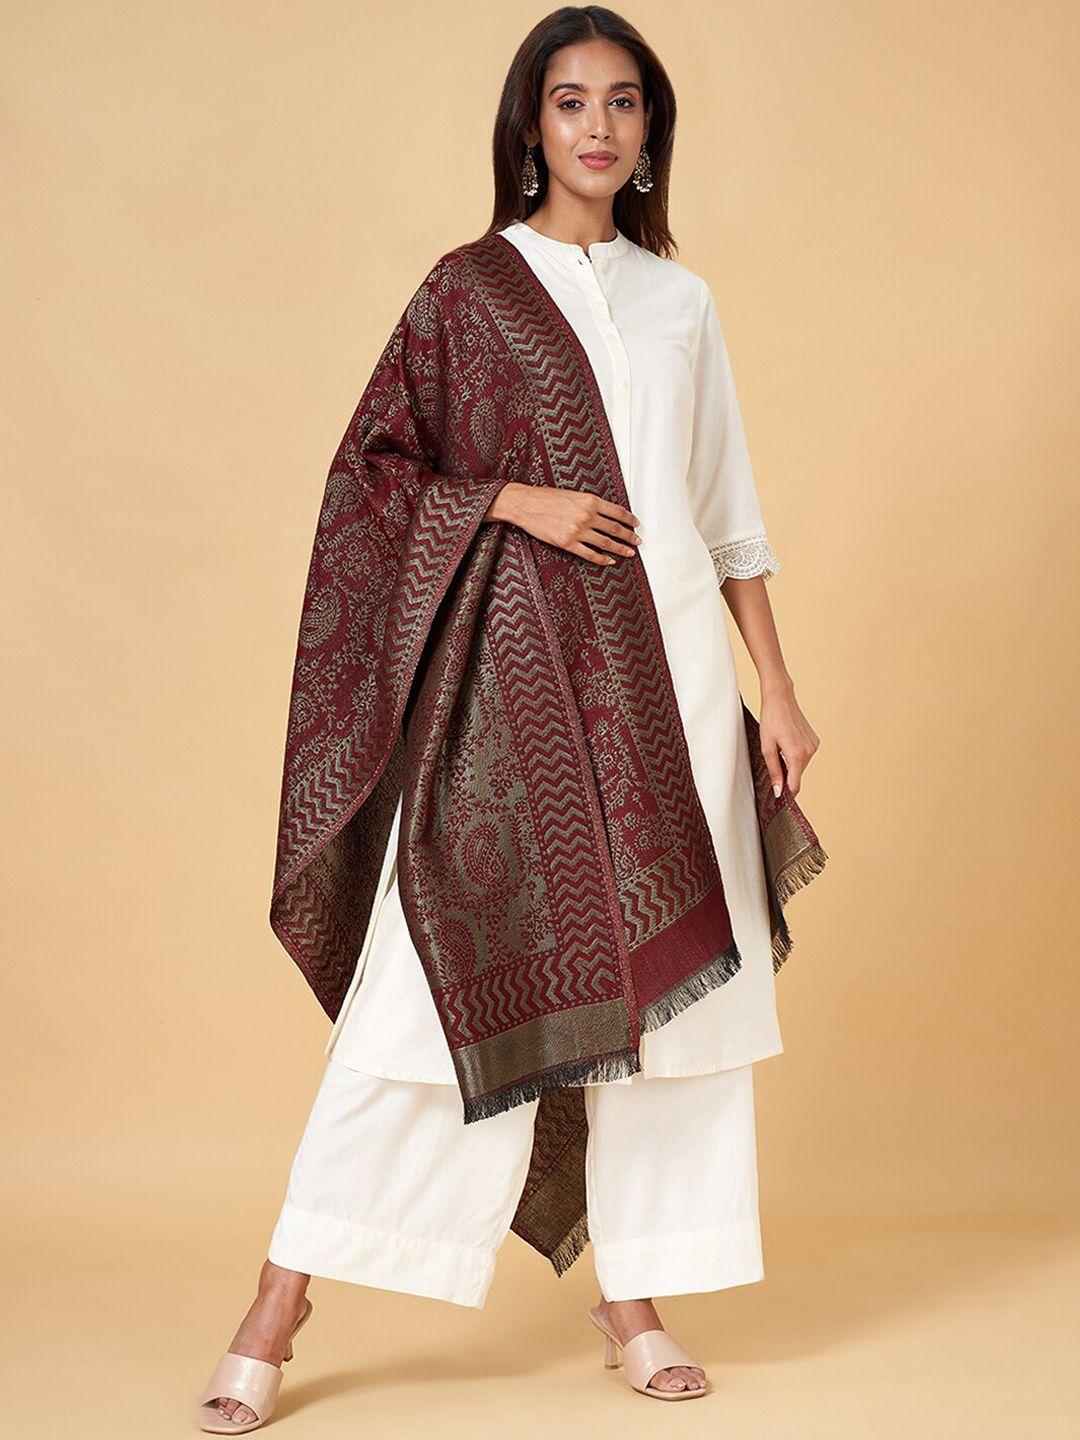 rangmanch by pantaloons floral woven design acrylic shawl